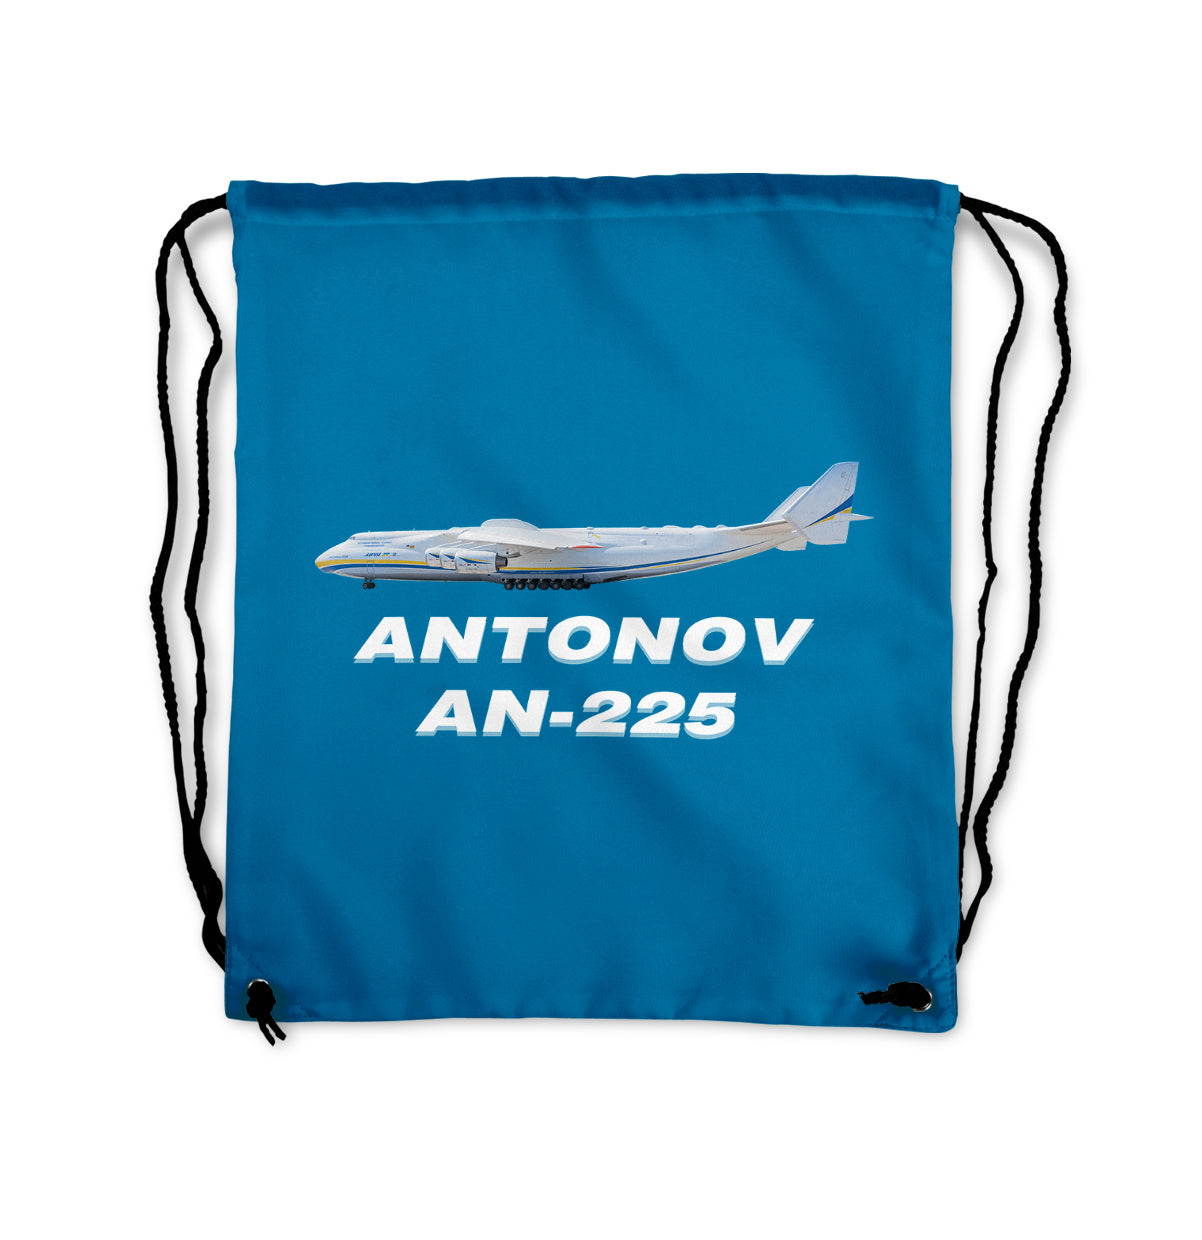 The Antonov AN-225 Designed Drawstring Bags